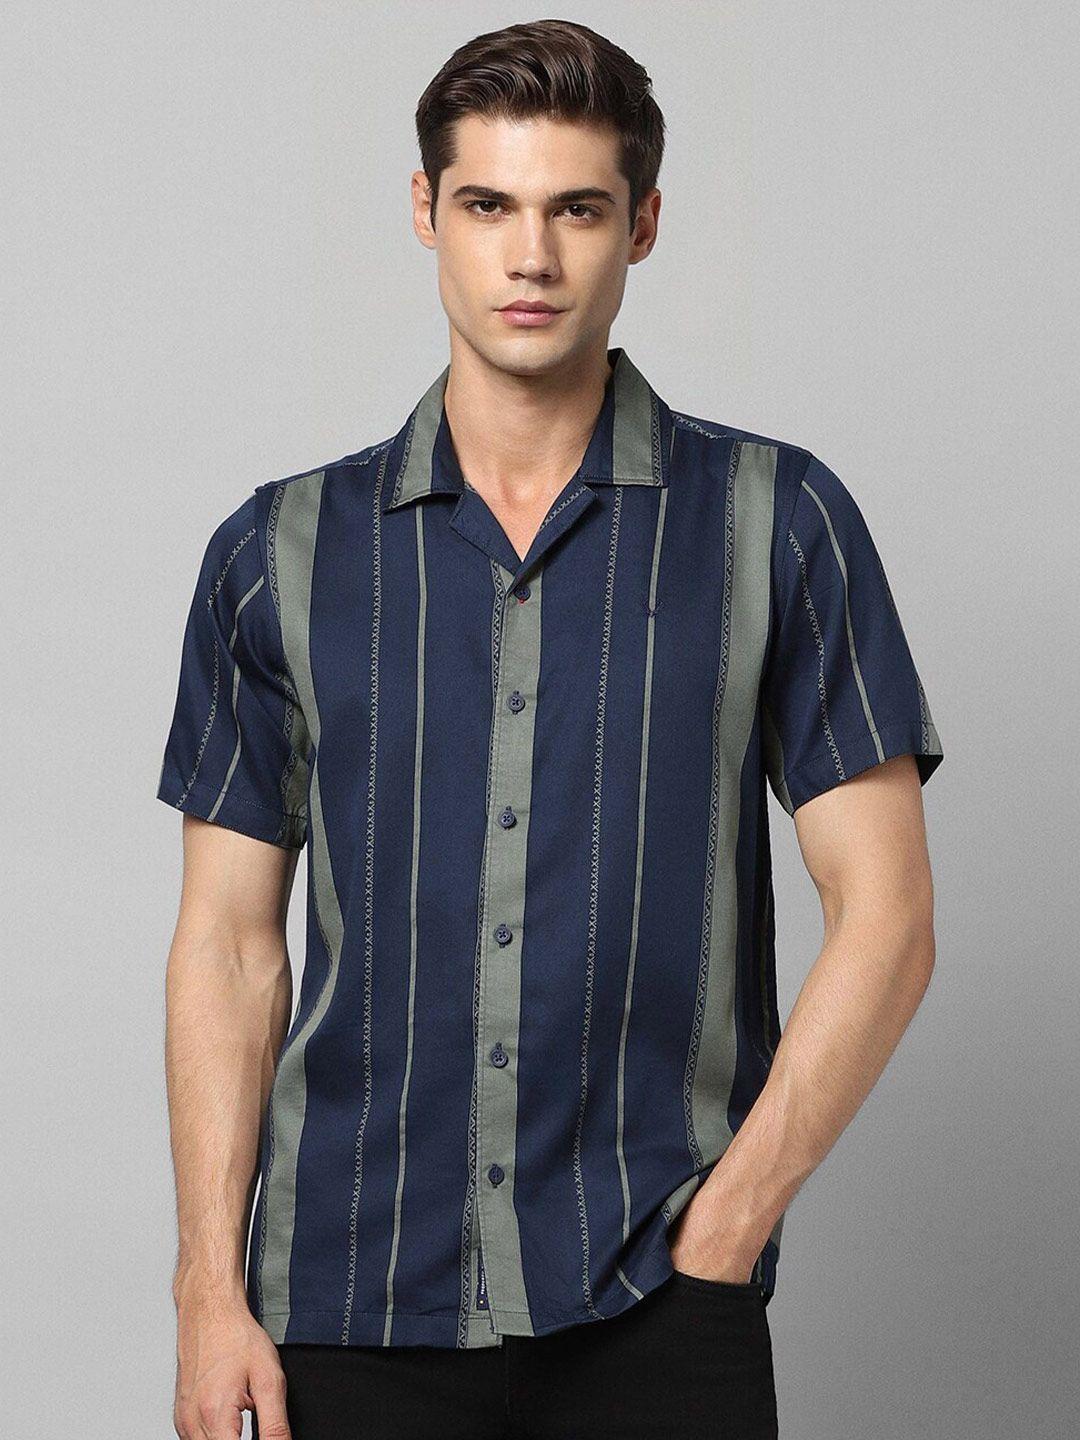 allen solly striped regular fit opaque cotton casual shirt